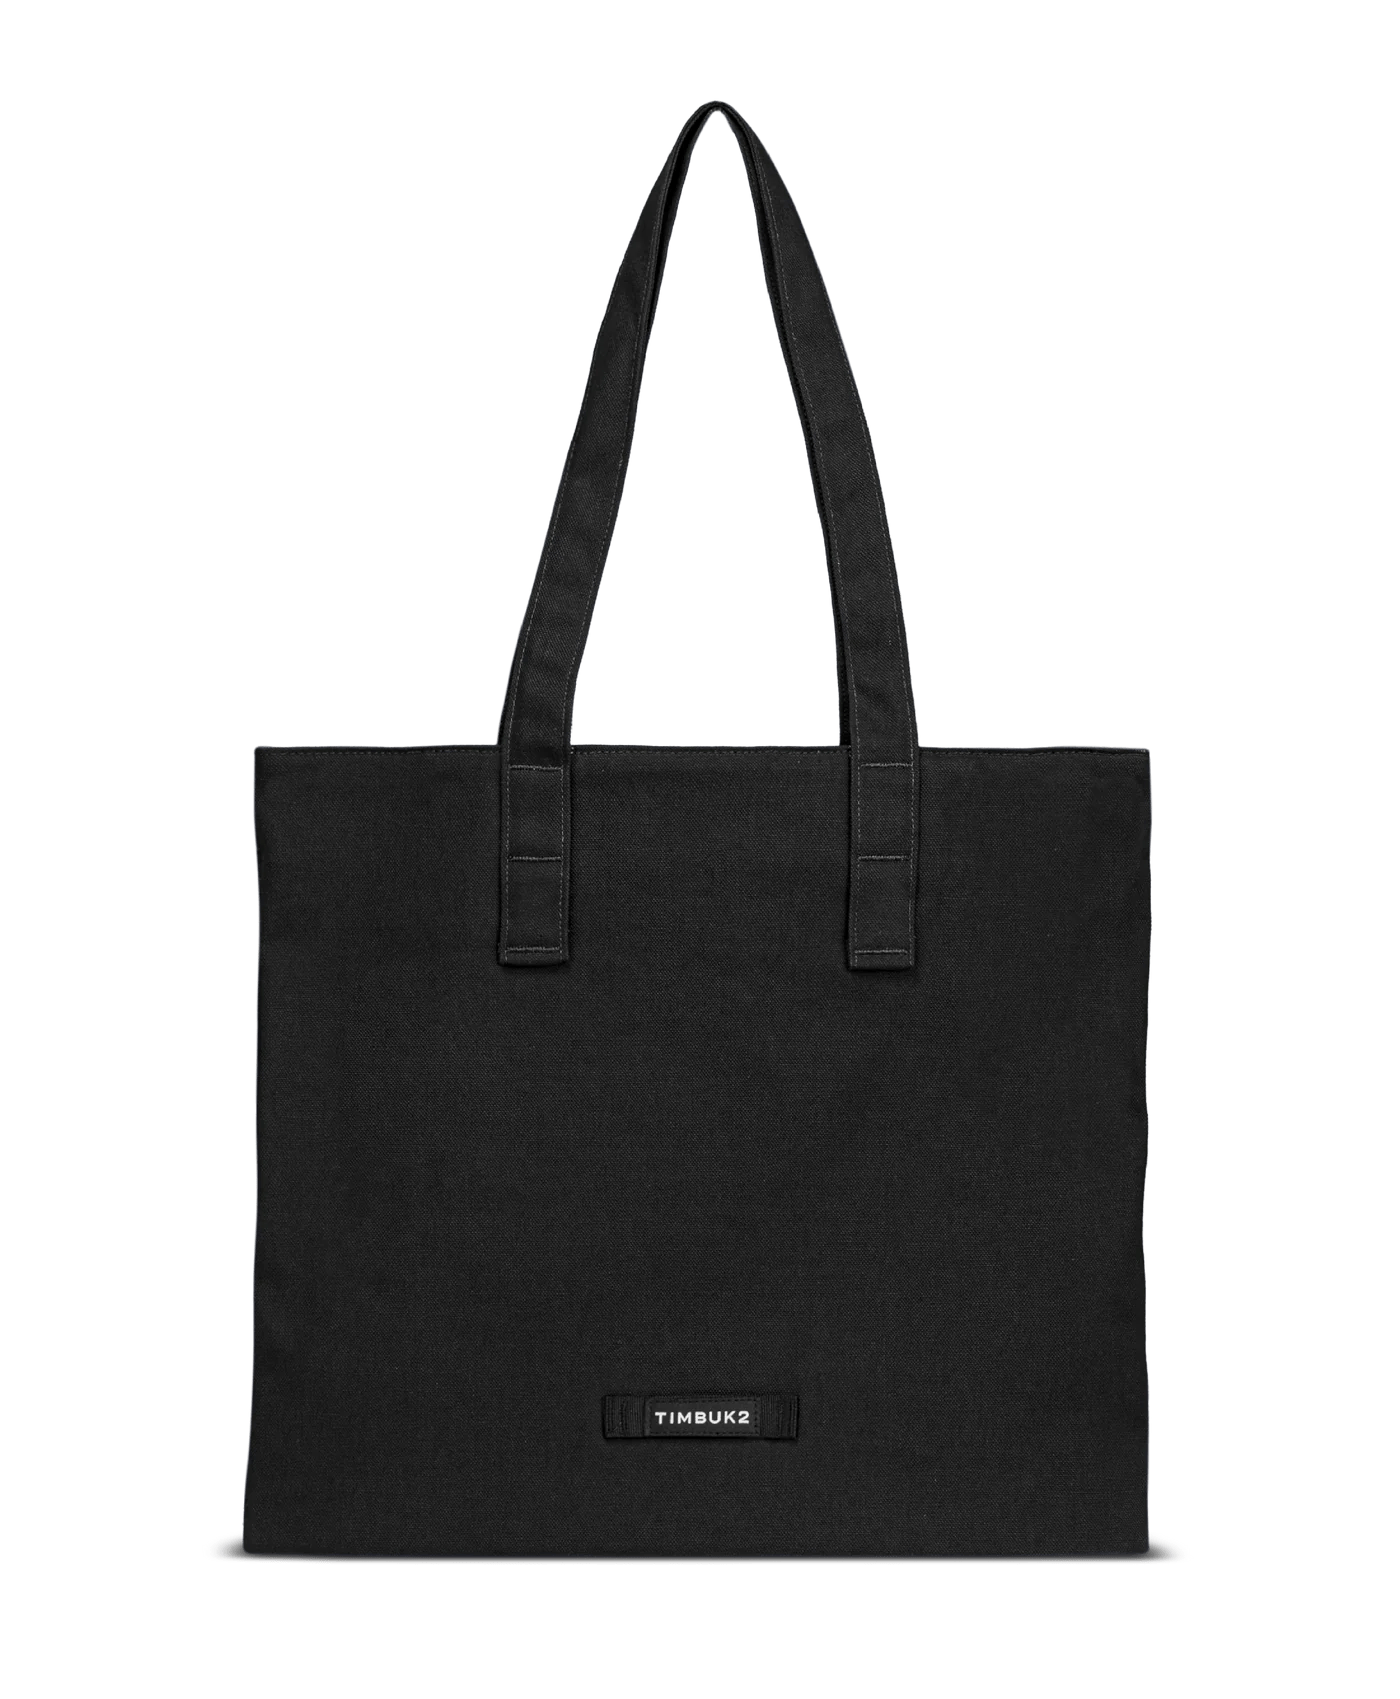 Black Custom Timbuk2 Canvas Shop Tote Bag